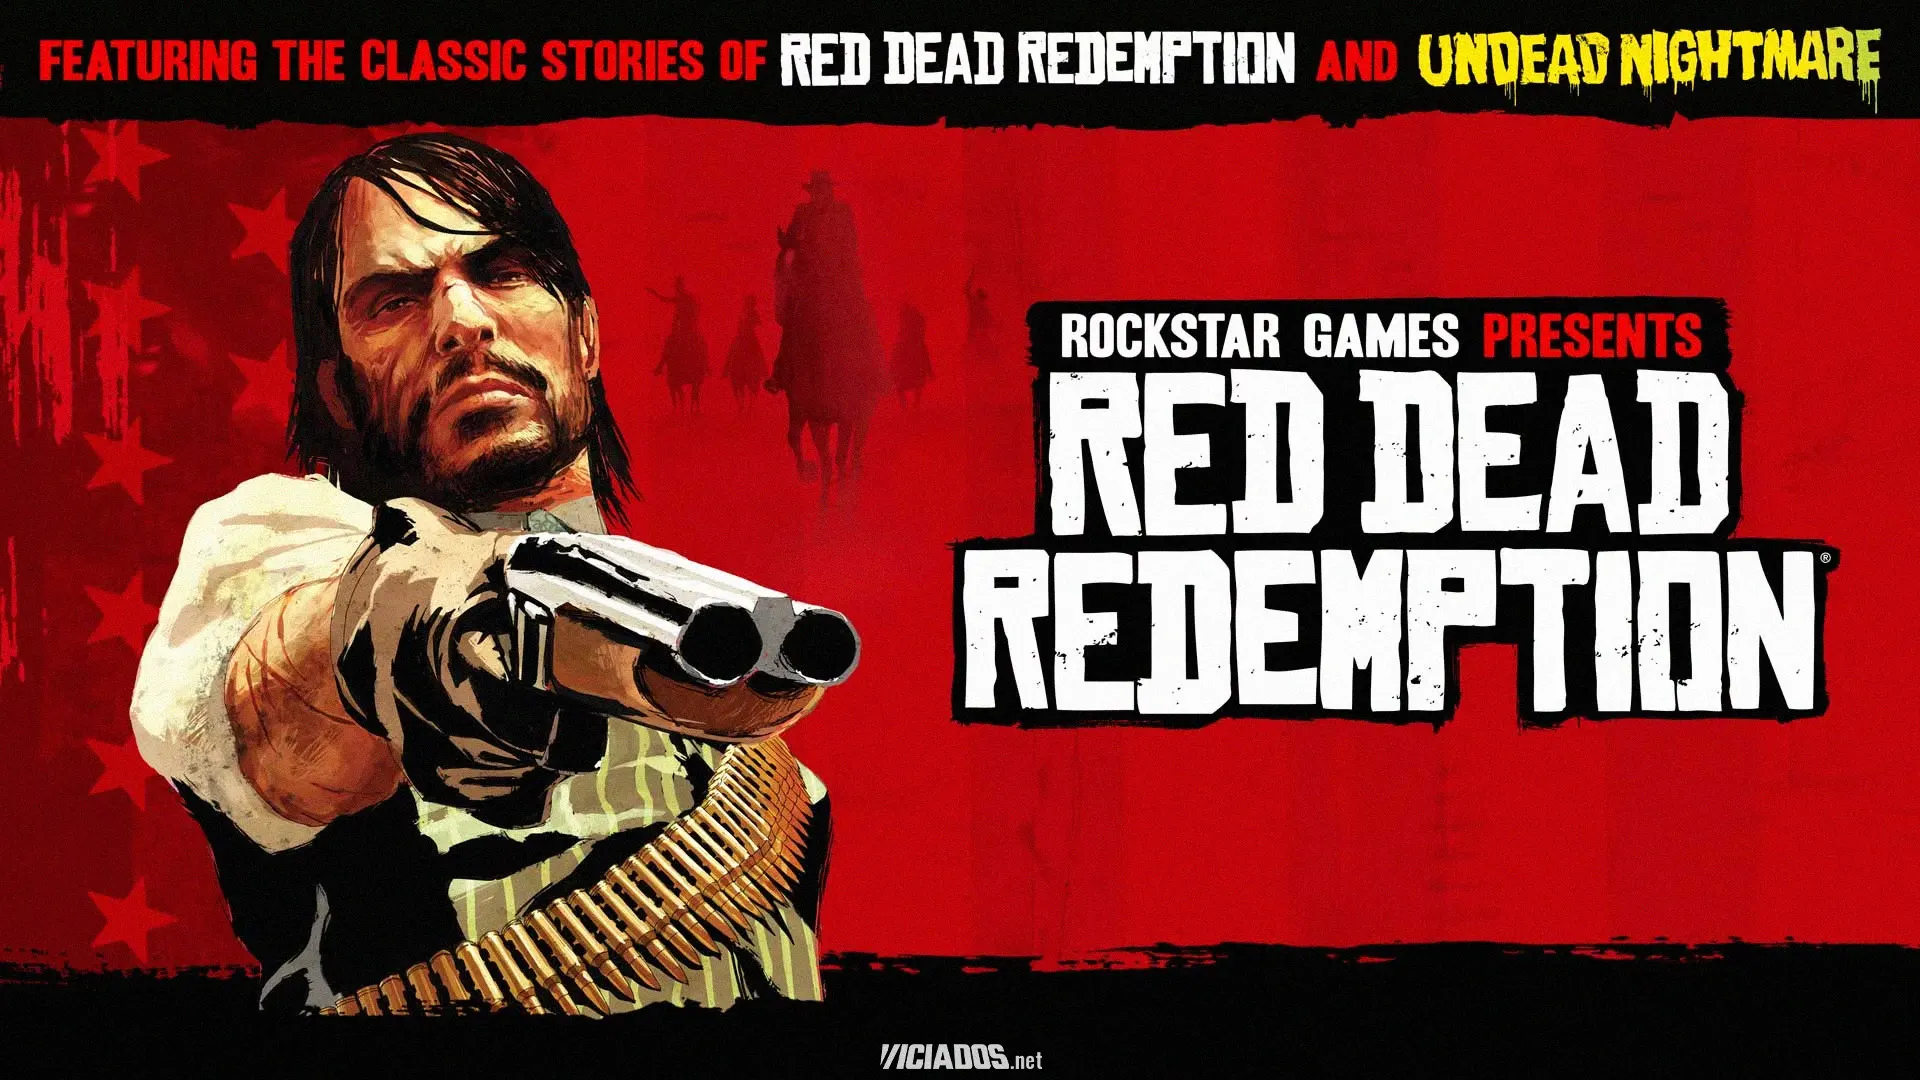 Agora é oficial! Red Dead Redemption Remaster é anunciado pela Rockstar Games 2023 Viciados